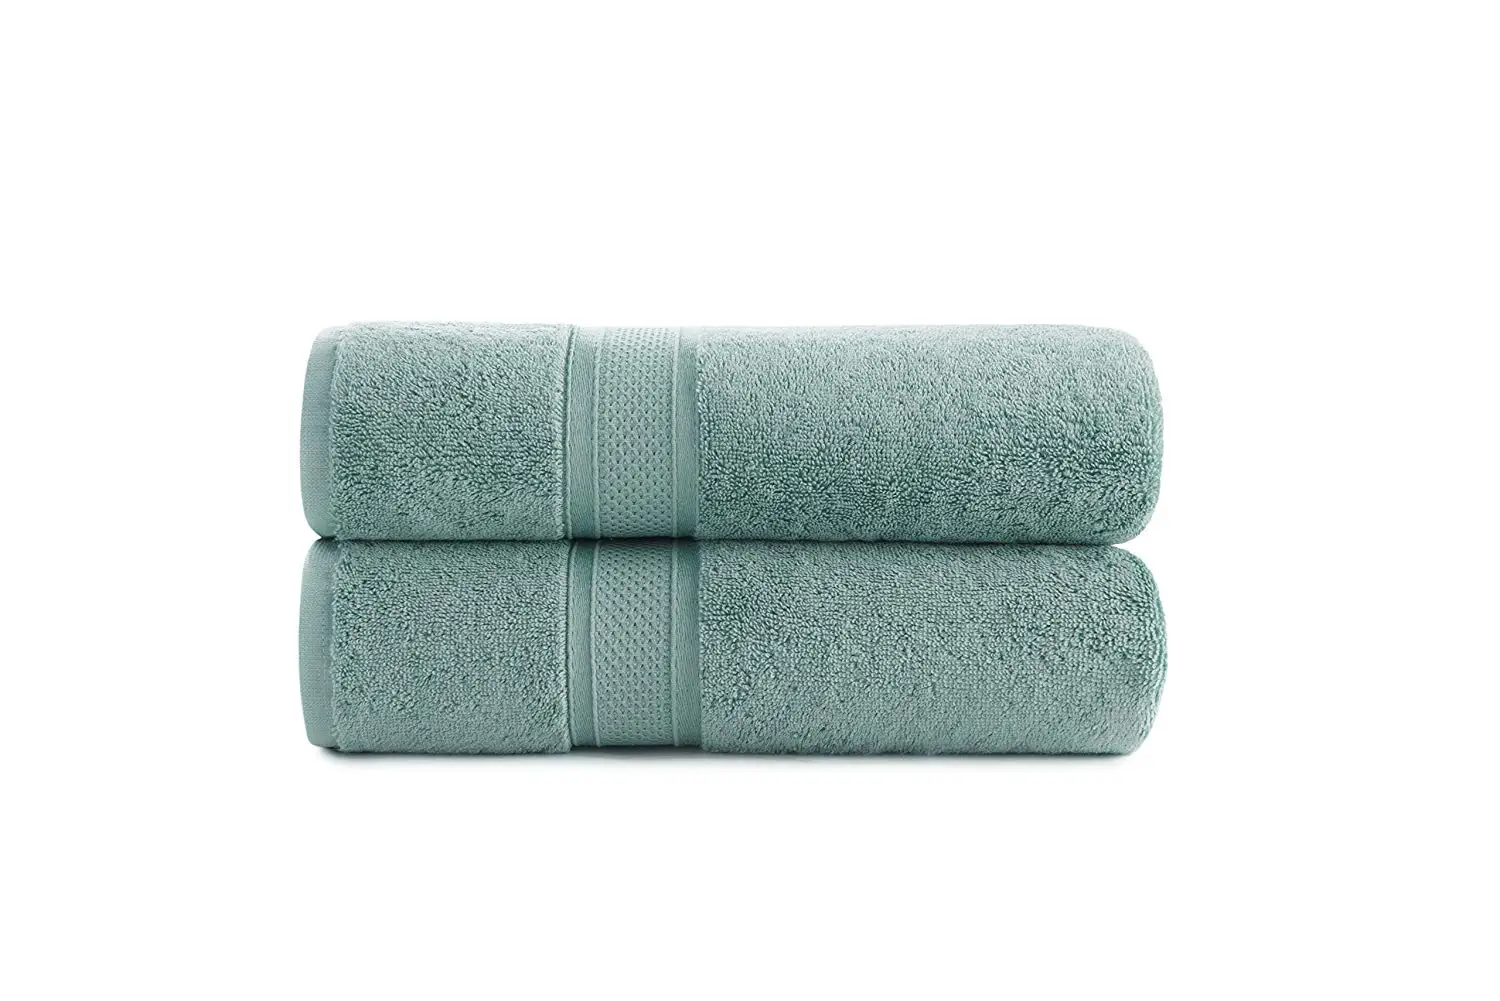 seafoam green towels